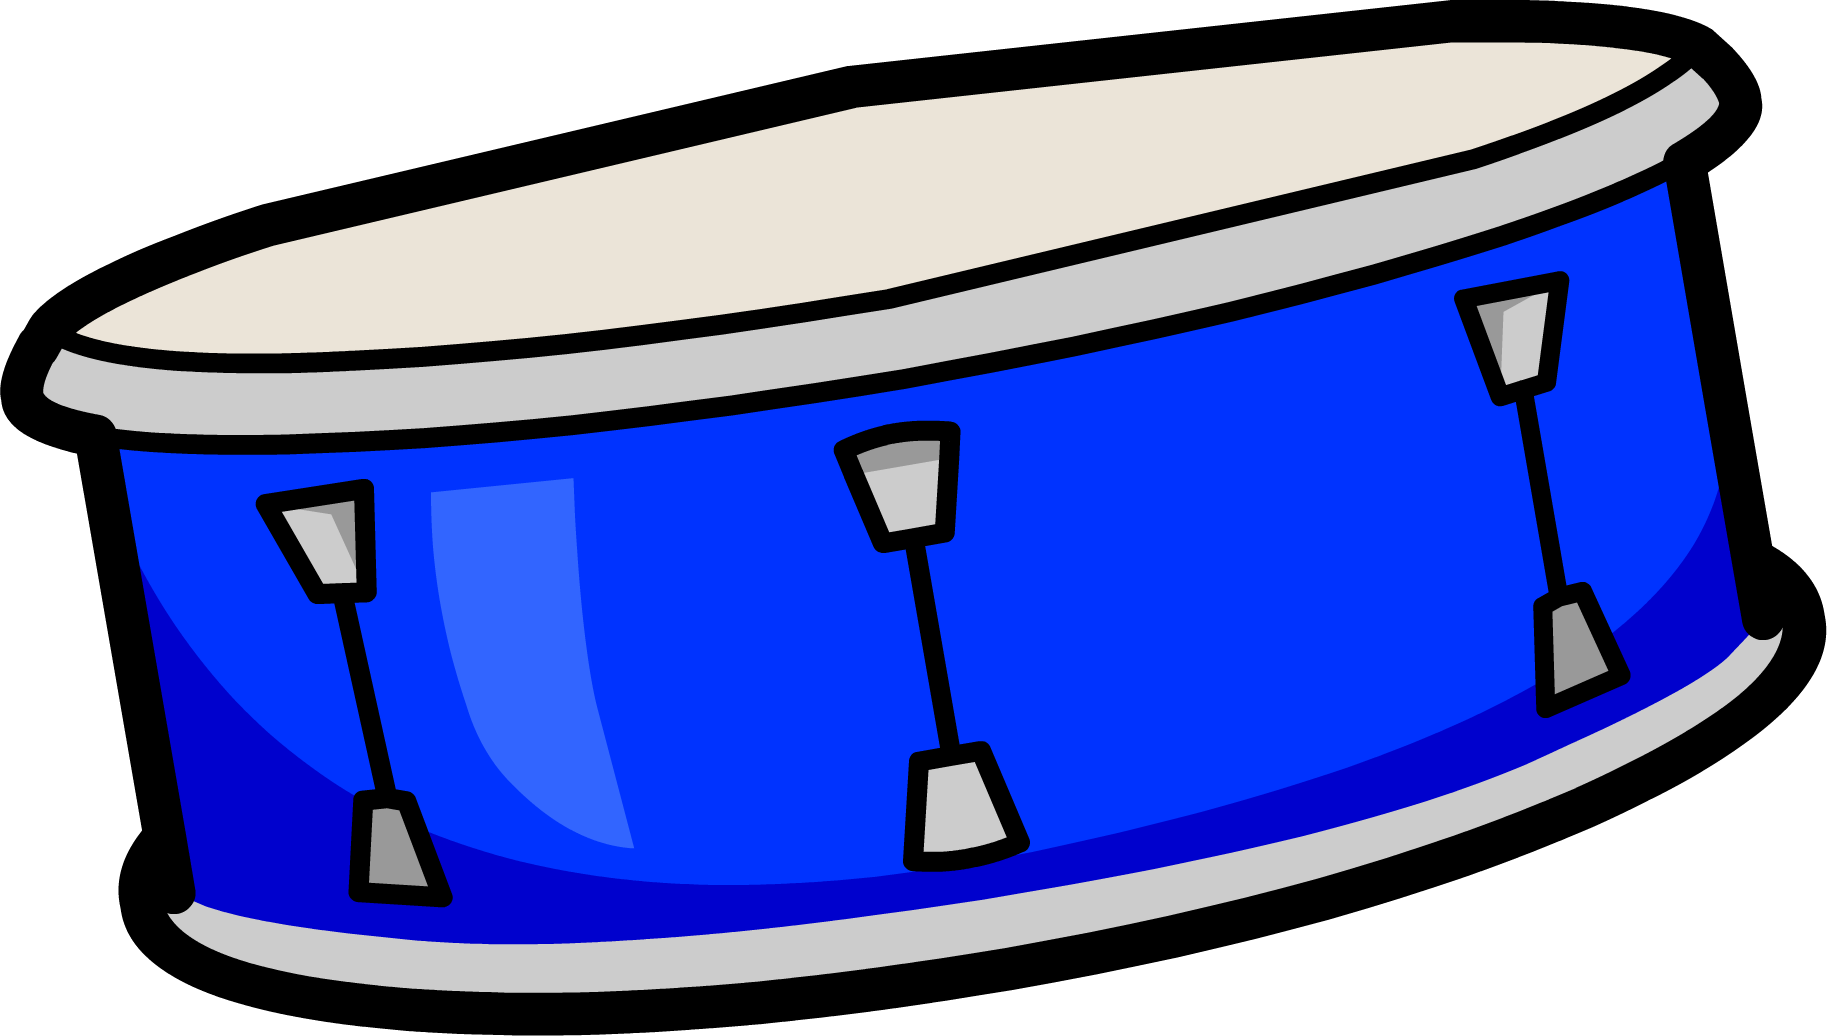 Blue Snare Drum Cartoon